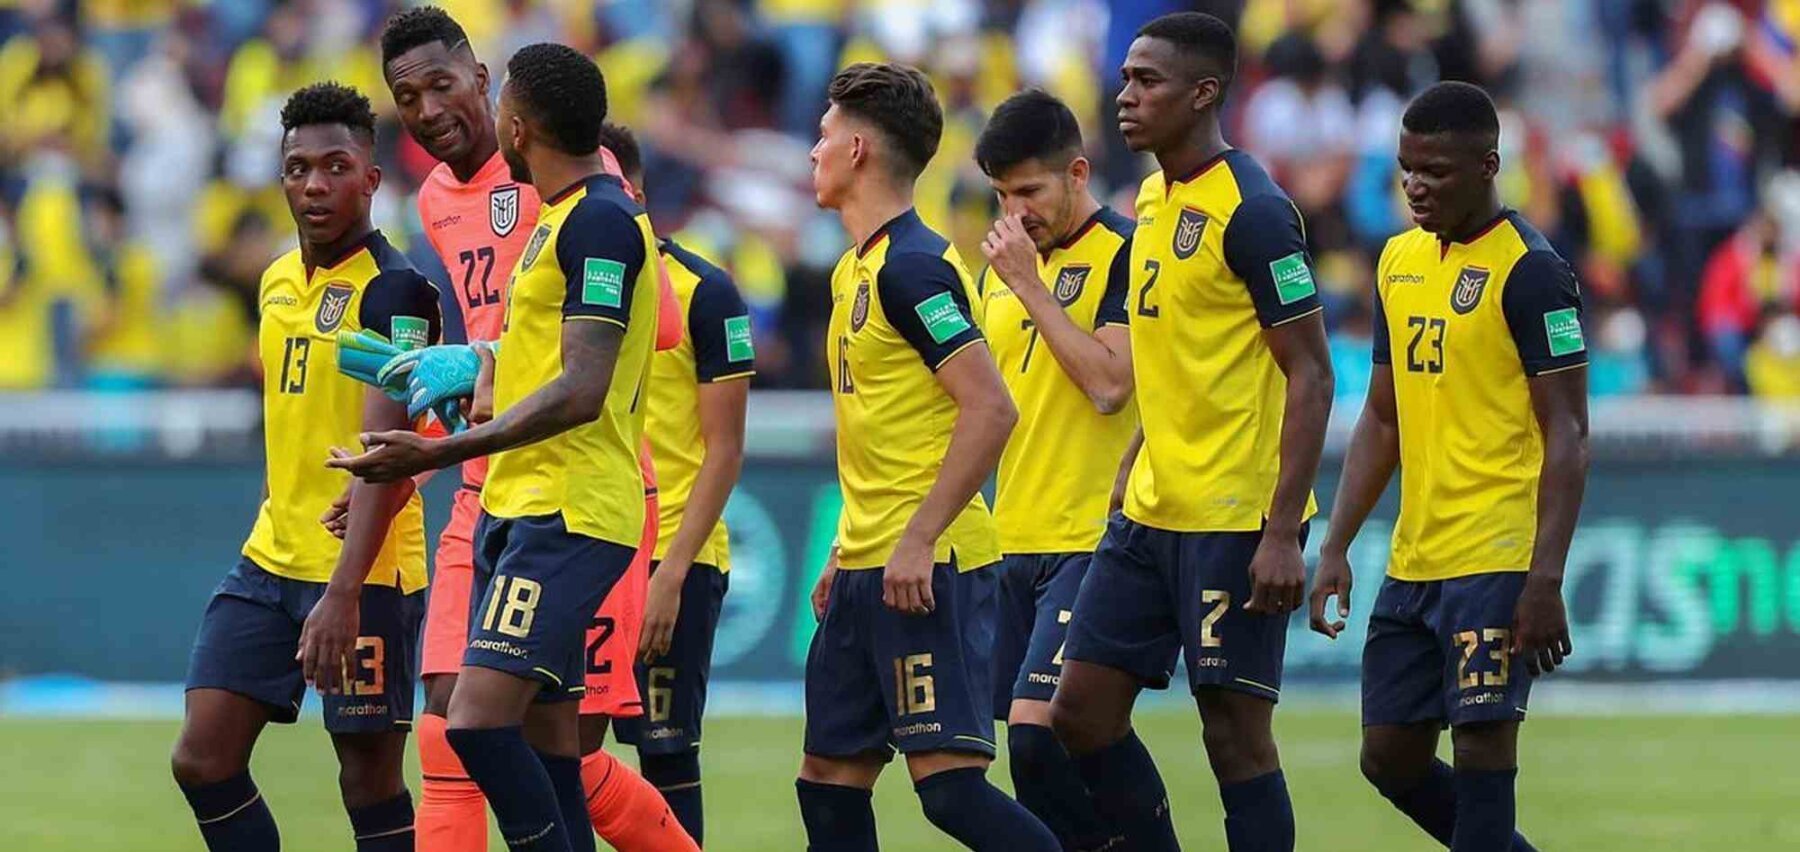 Ver Ecuador vs México Gratis Online Transmisión del partido amistoso